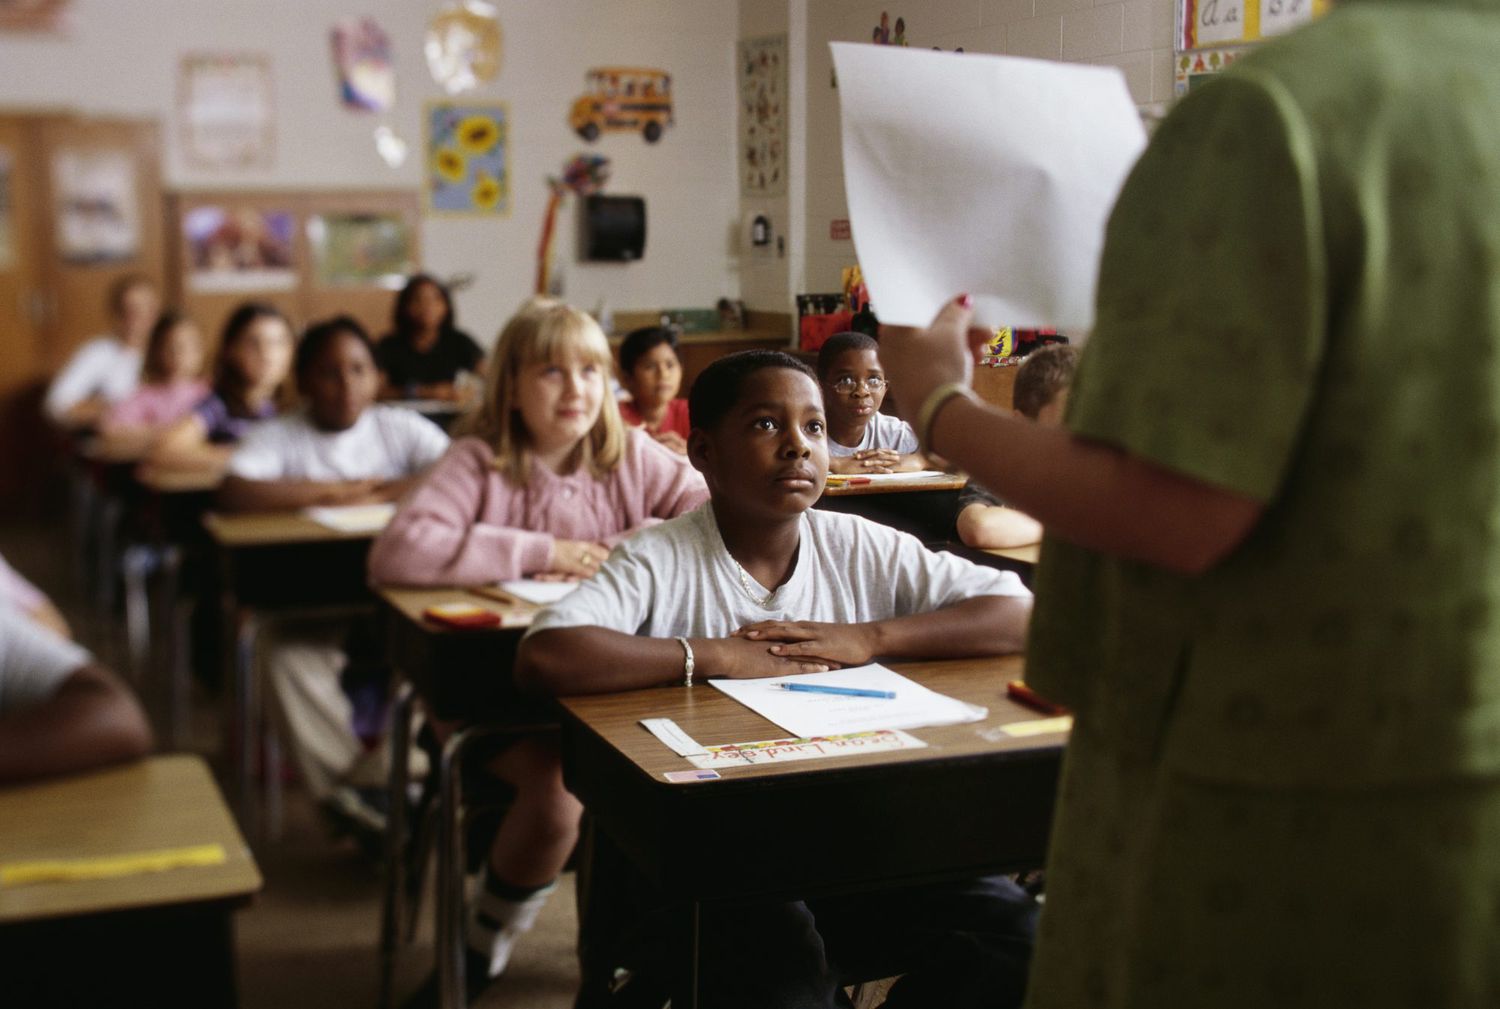 Faltan profesores de educación especial: así afecta a los alumnos negros discapacitados